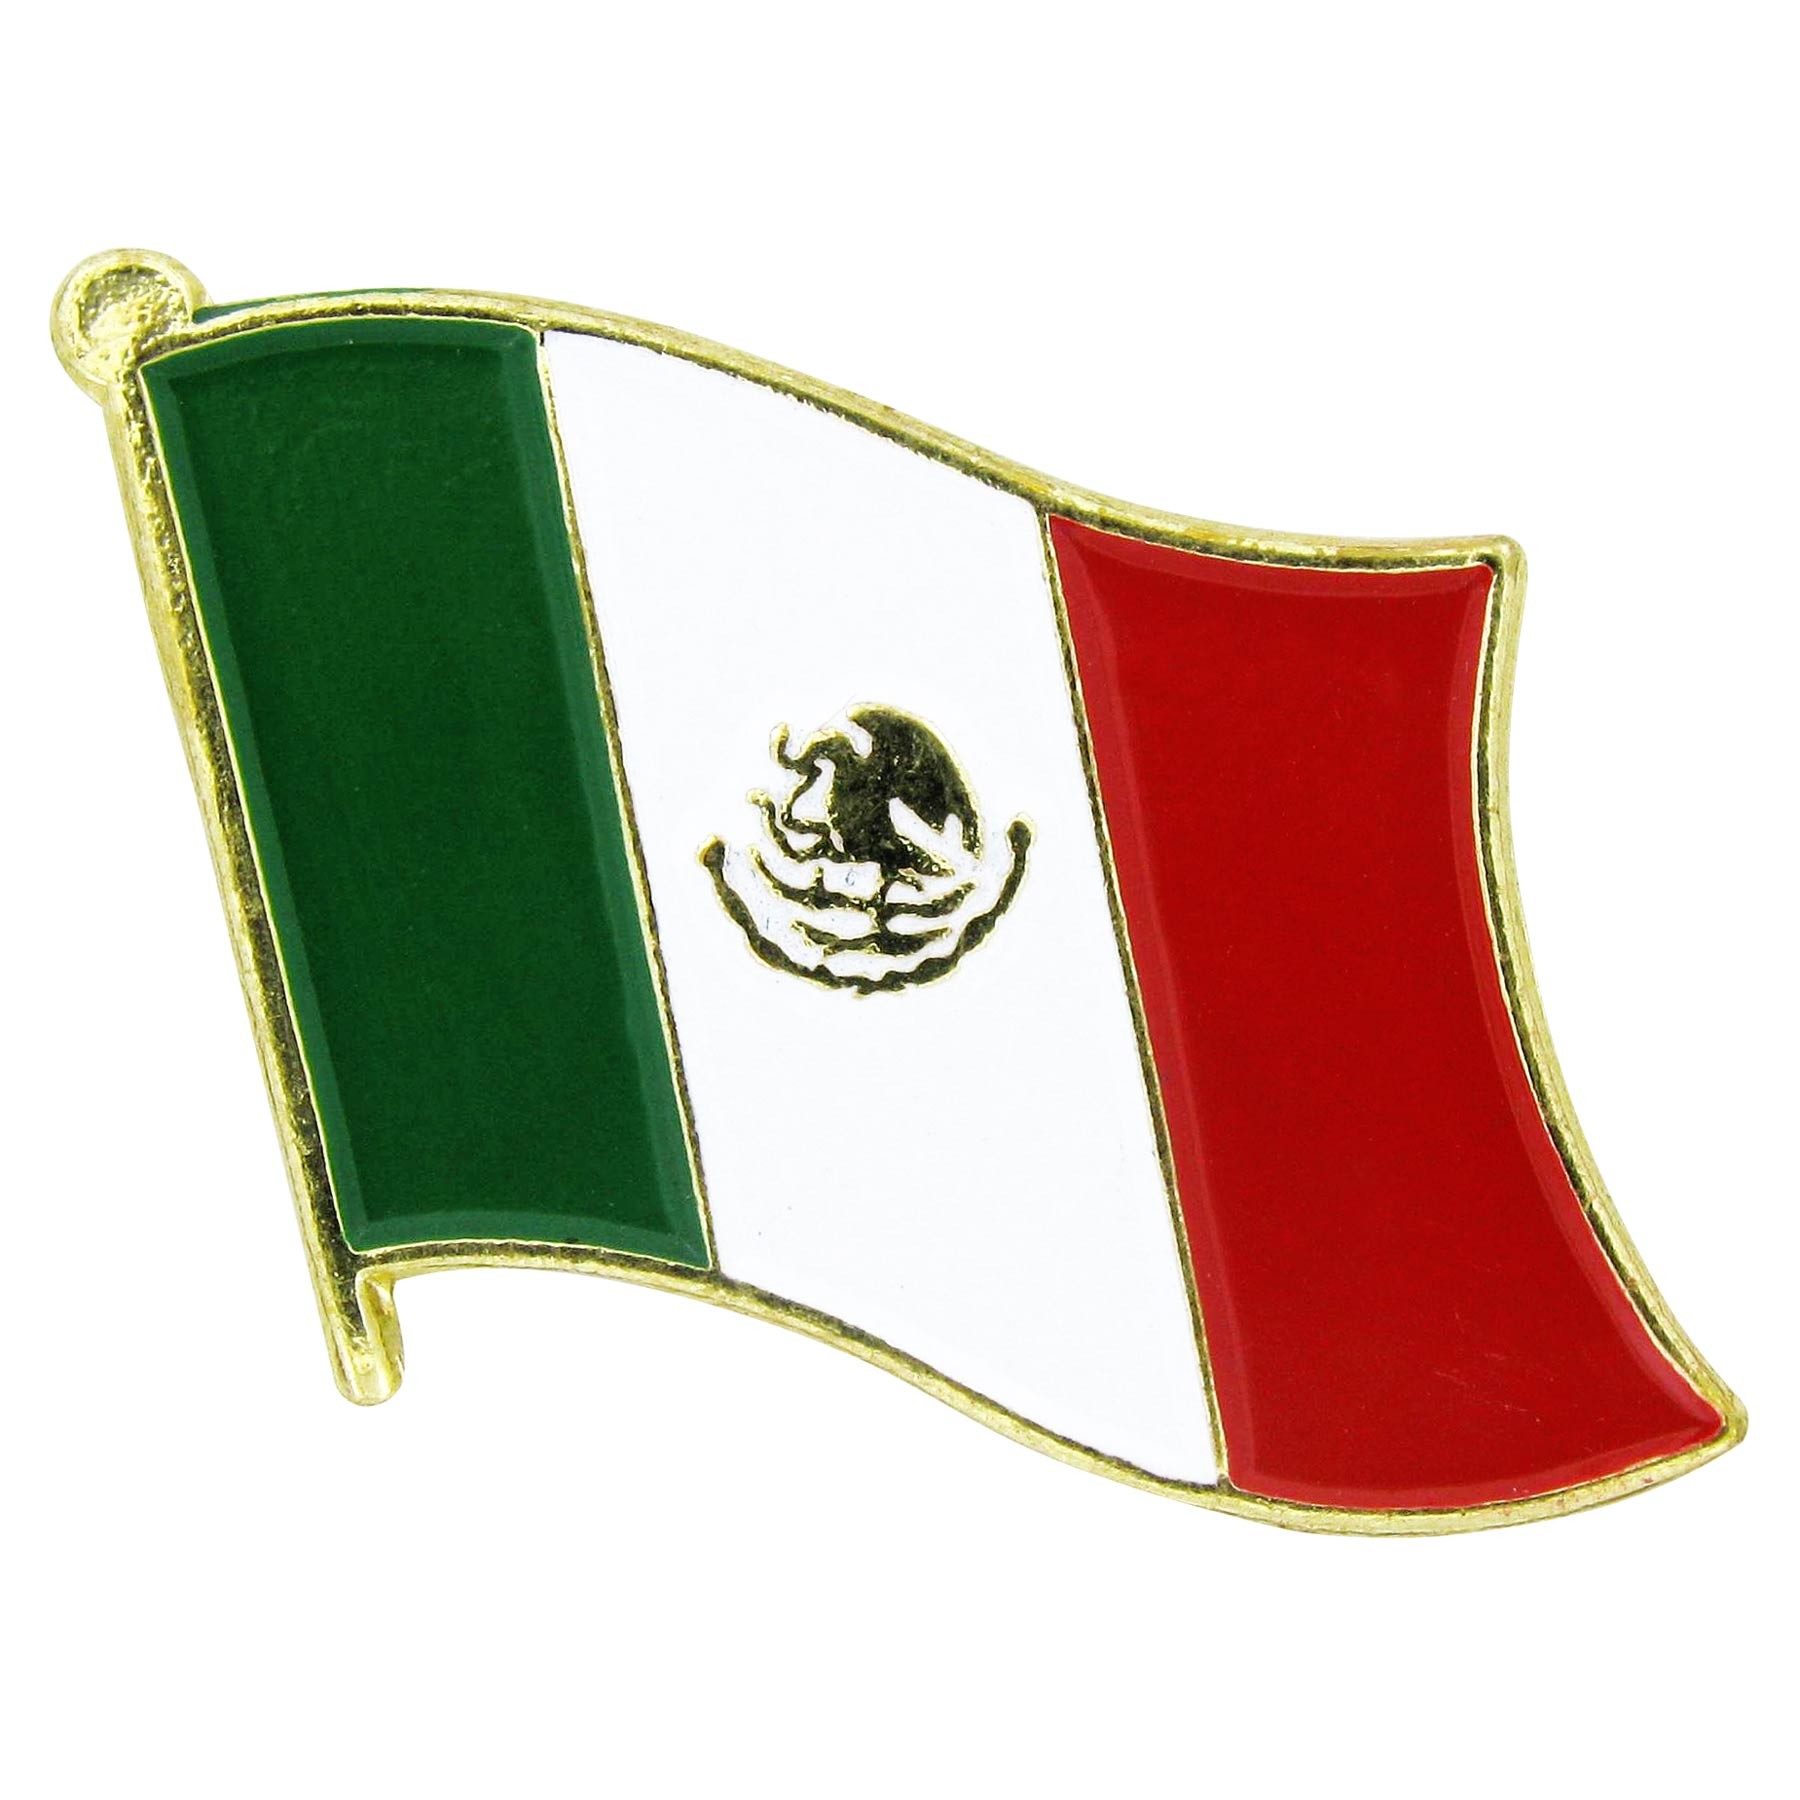 Mexican Flag Clip Art